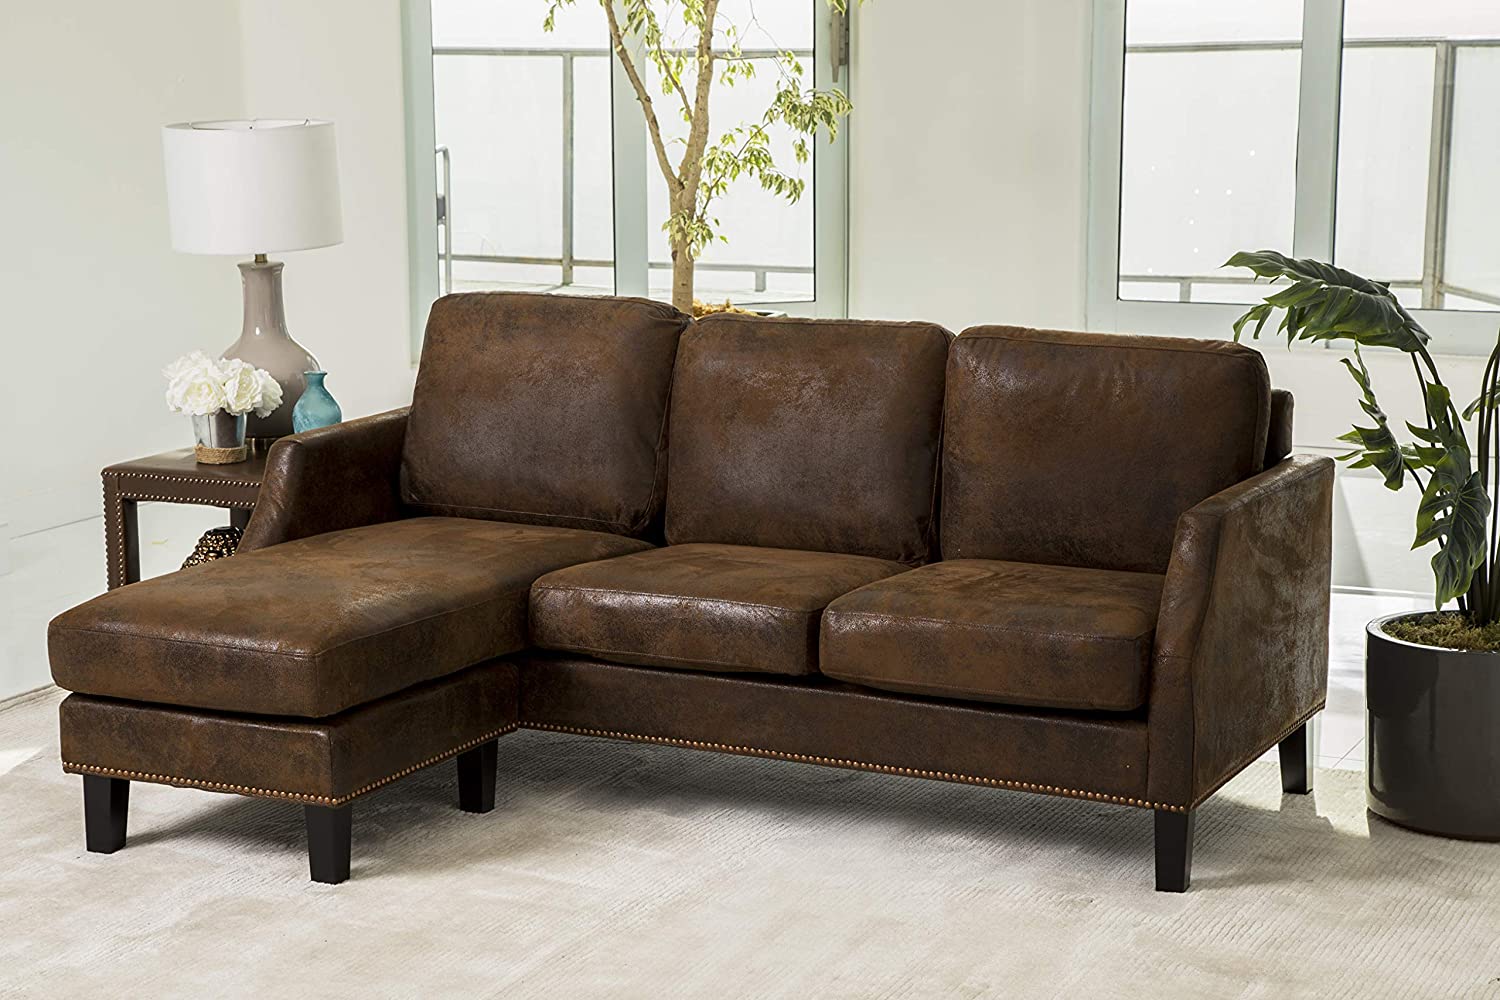 nina faux leather sofa review